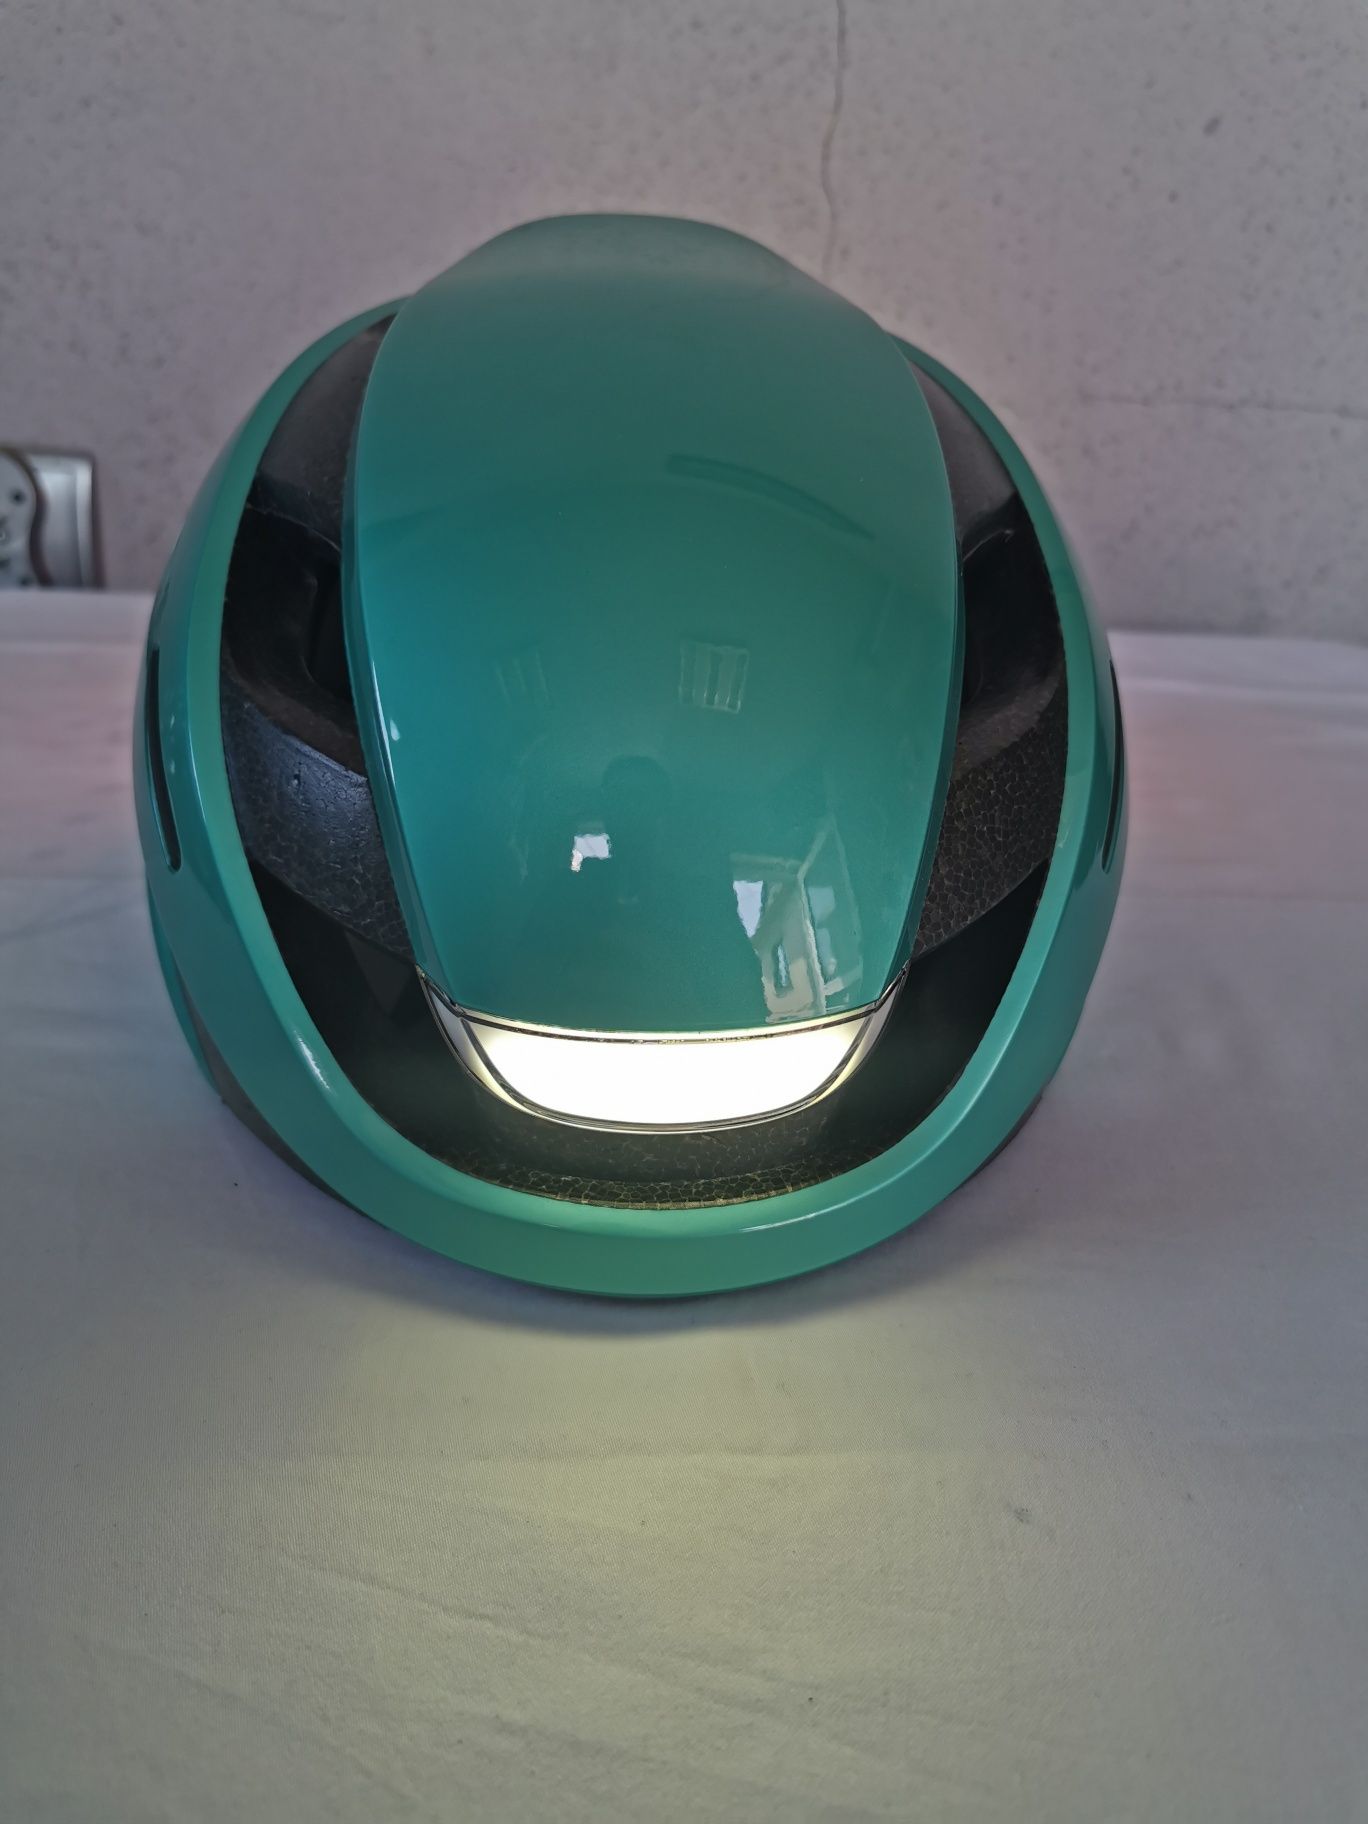 Lumos Ultra MIPS Helmet Aquamarine, ML, 54 - 61cm

365cycles